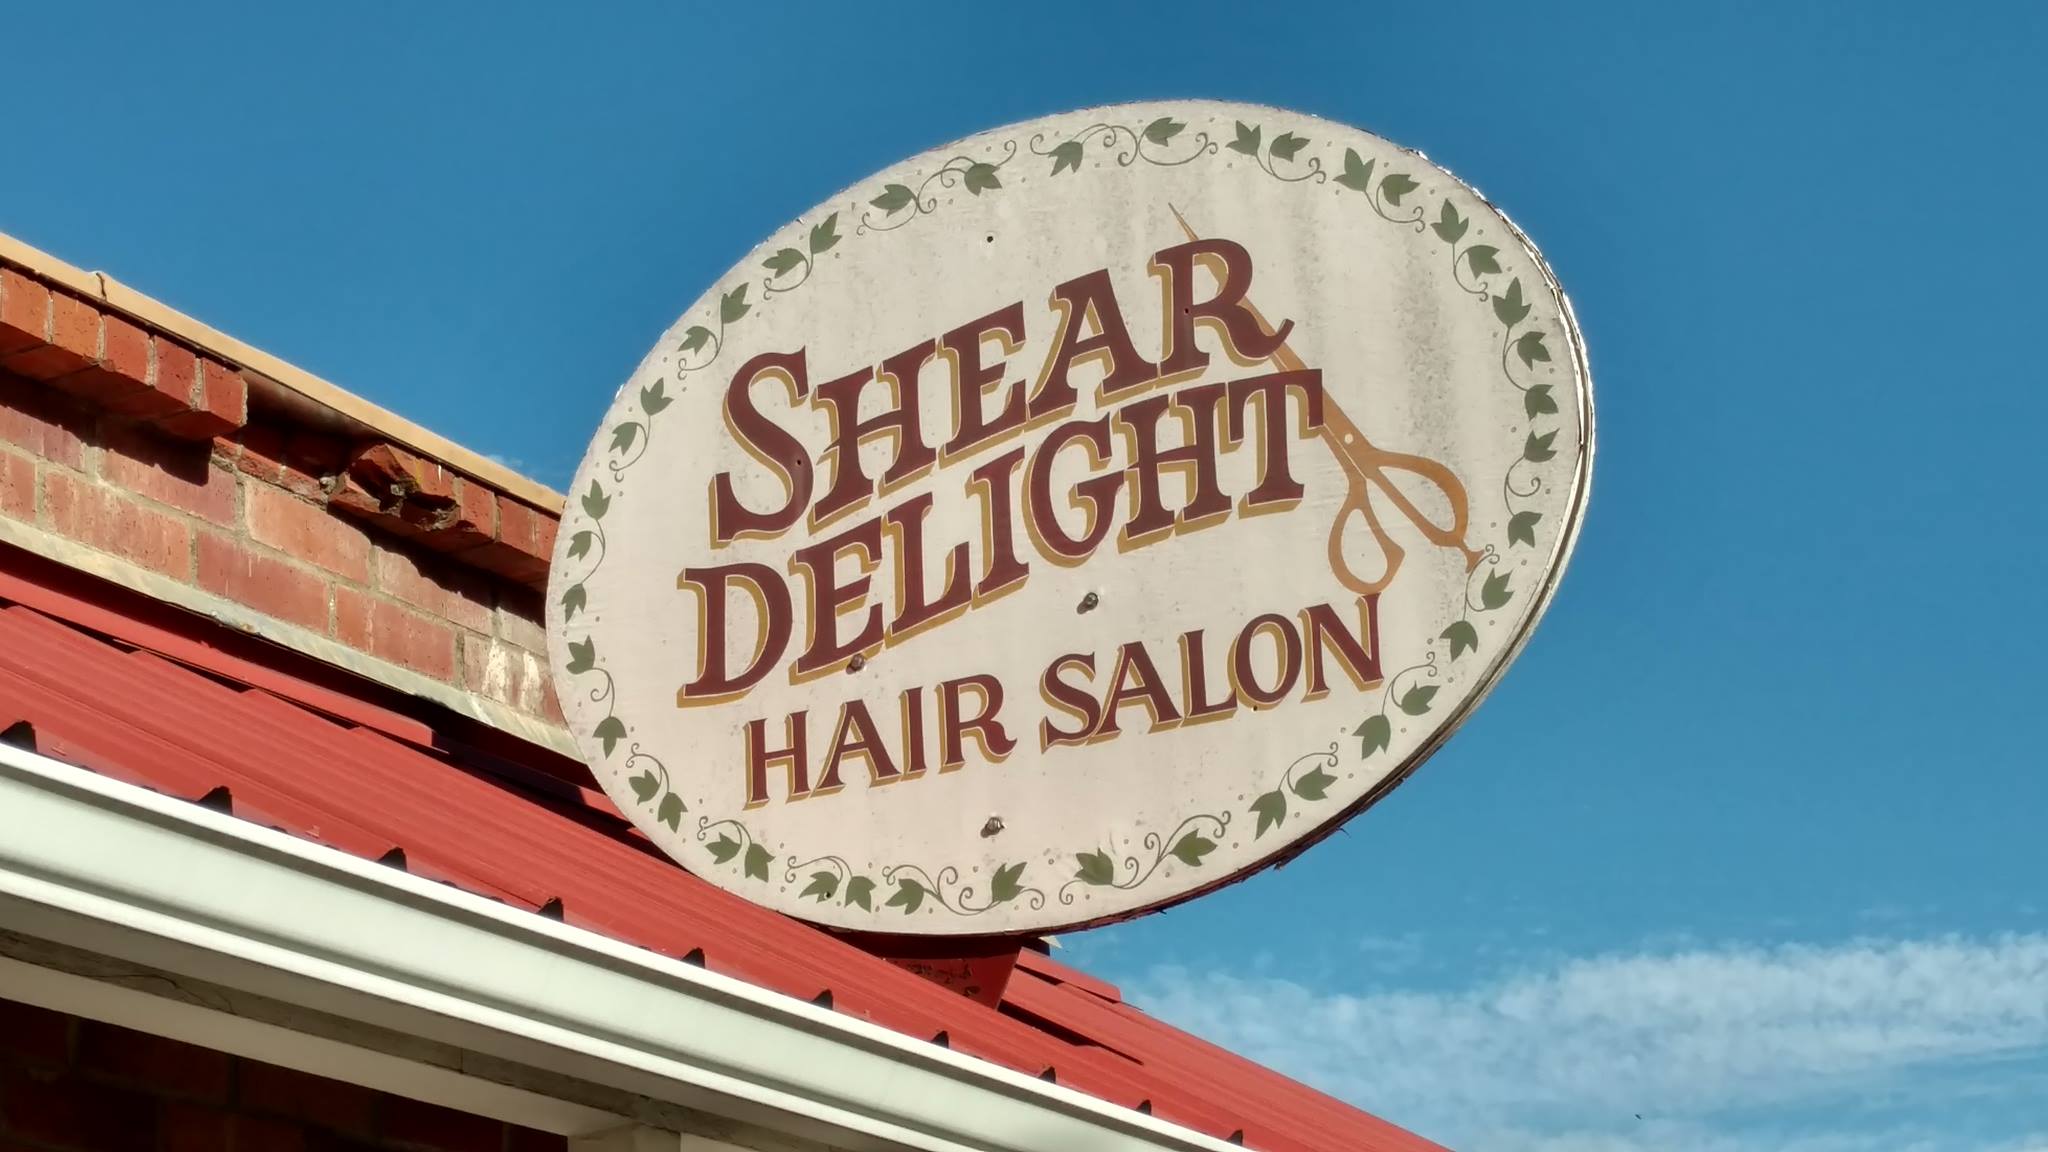 Shear Delight Salon 605 Main St, Weaverville California 96093